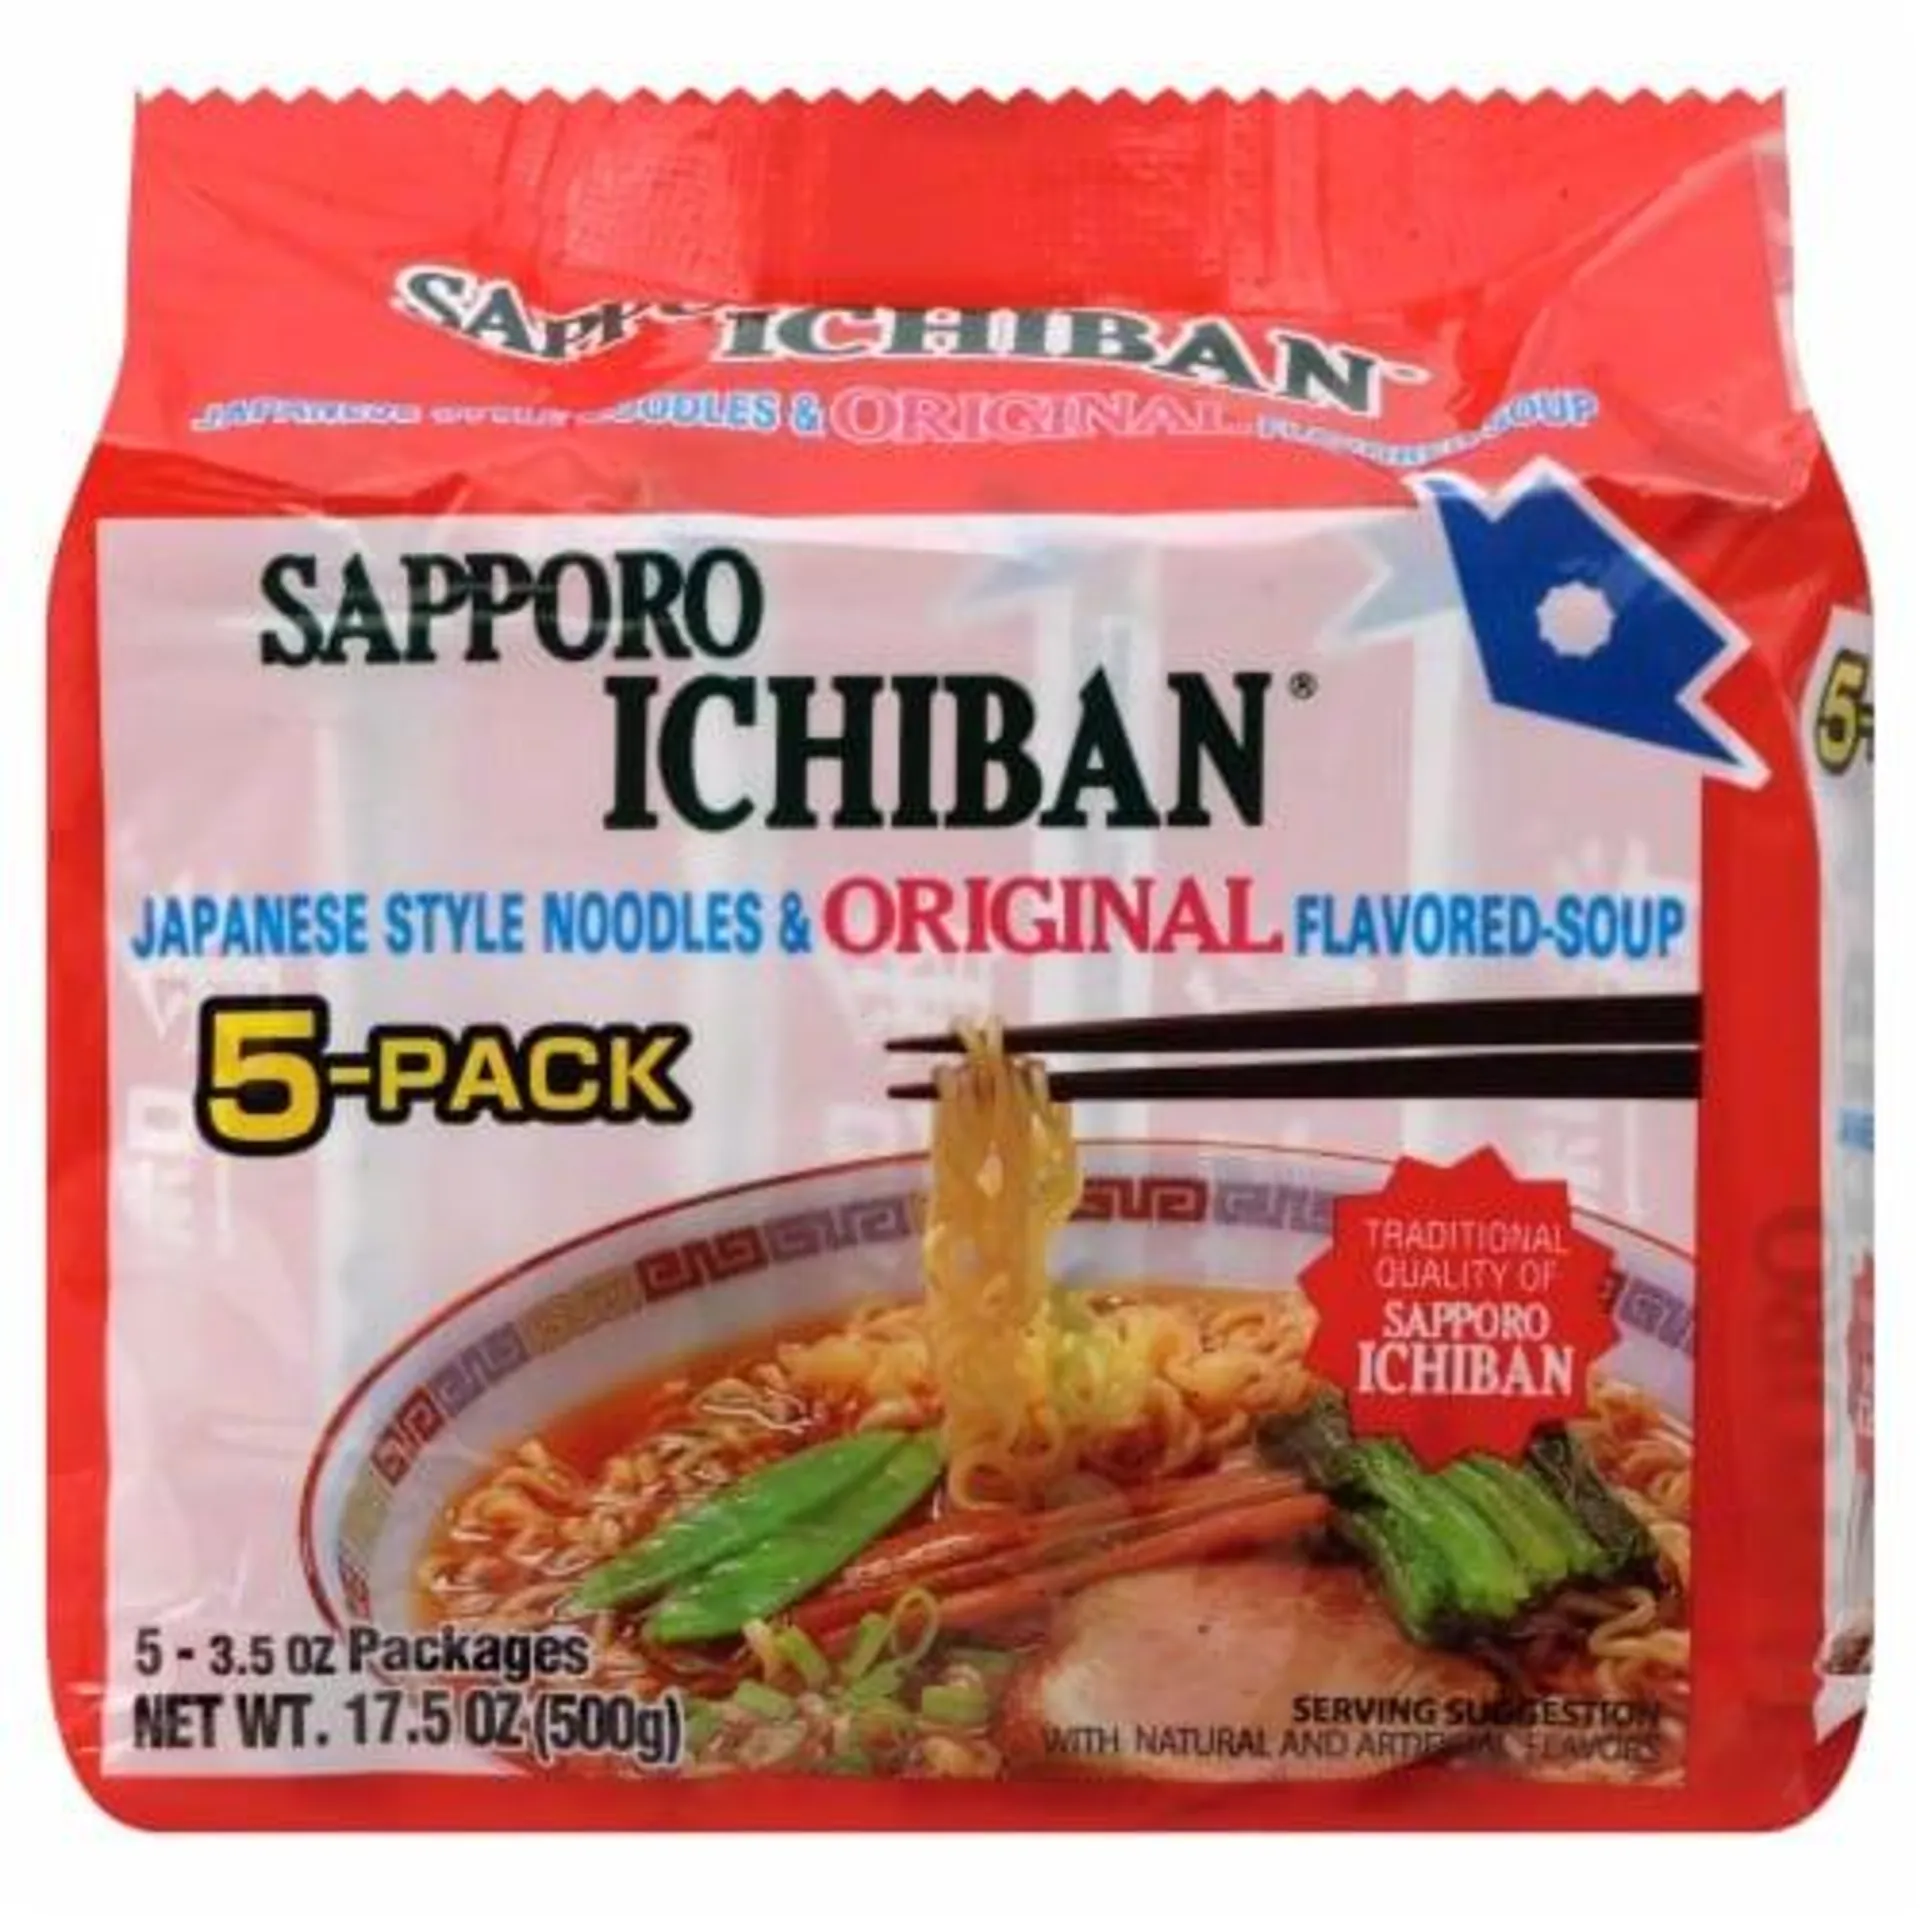 Sapporo Ichiban® Original Japanese Style Noodles